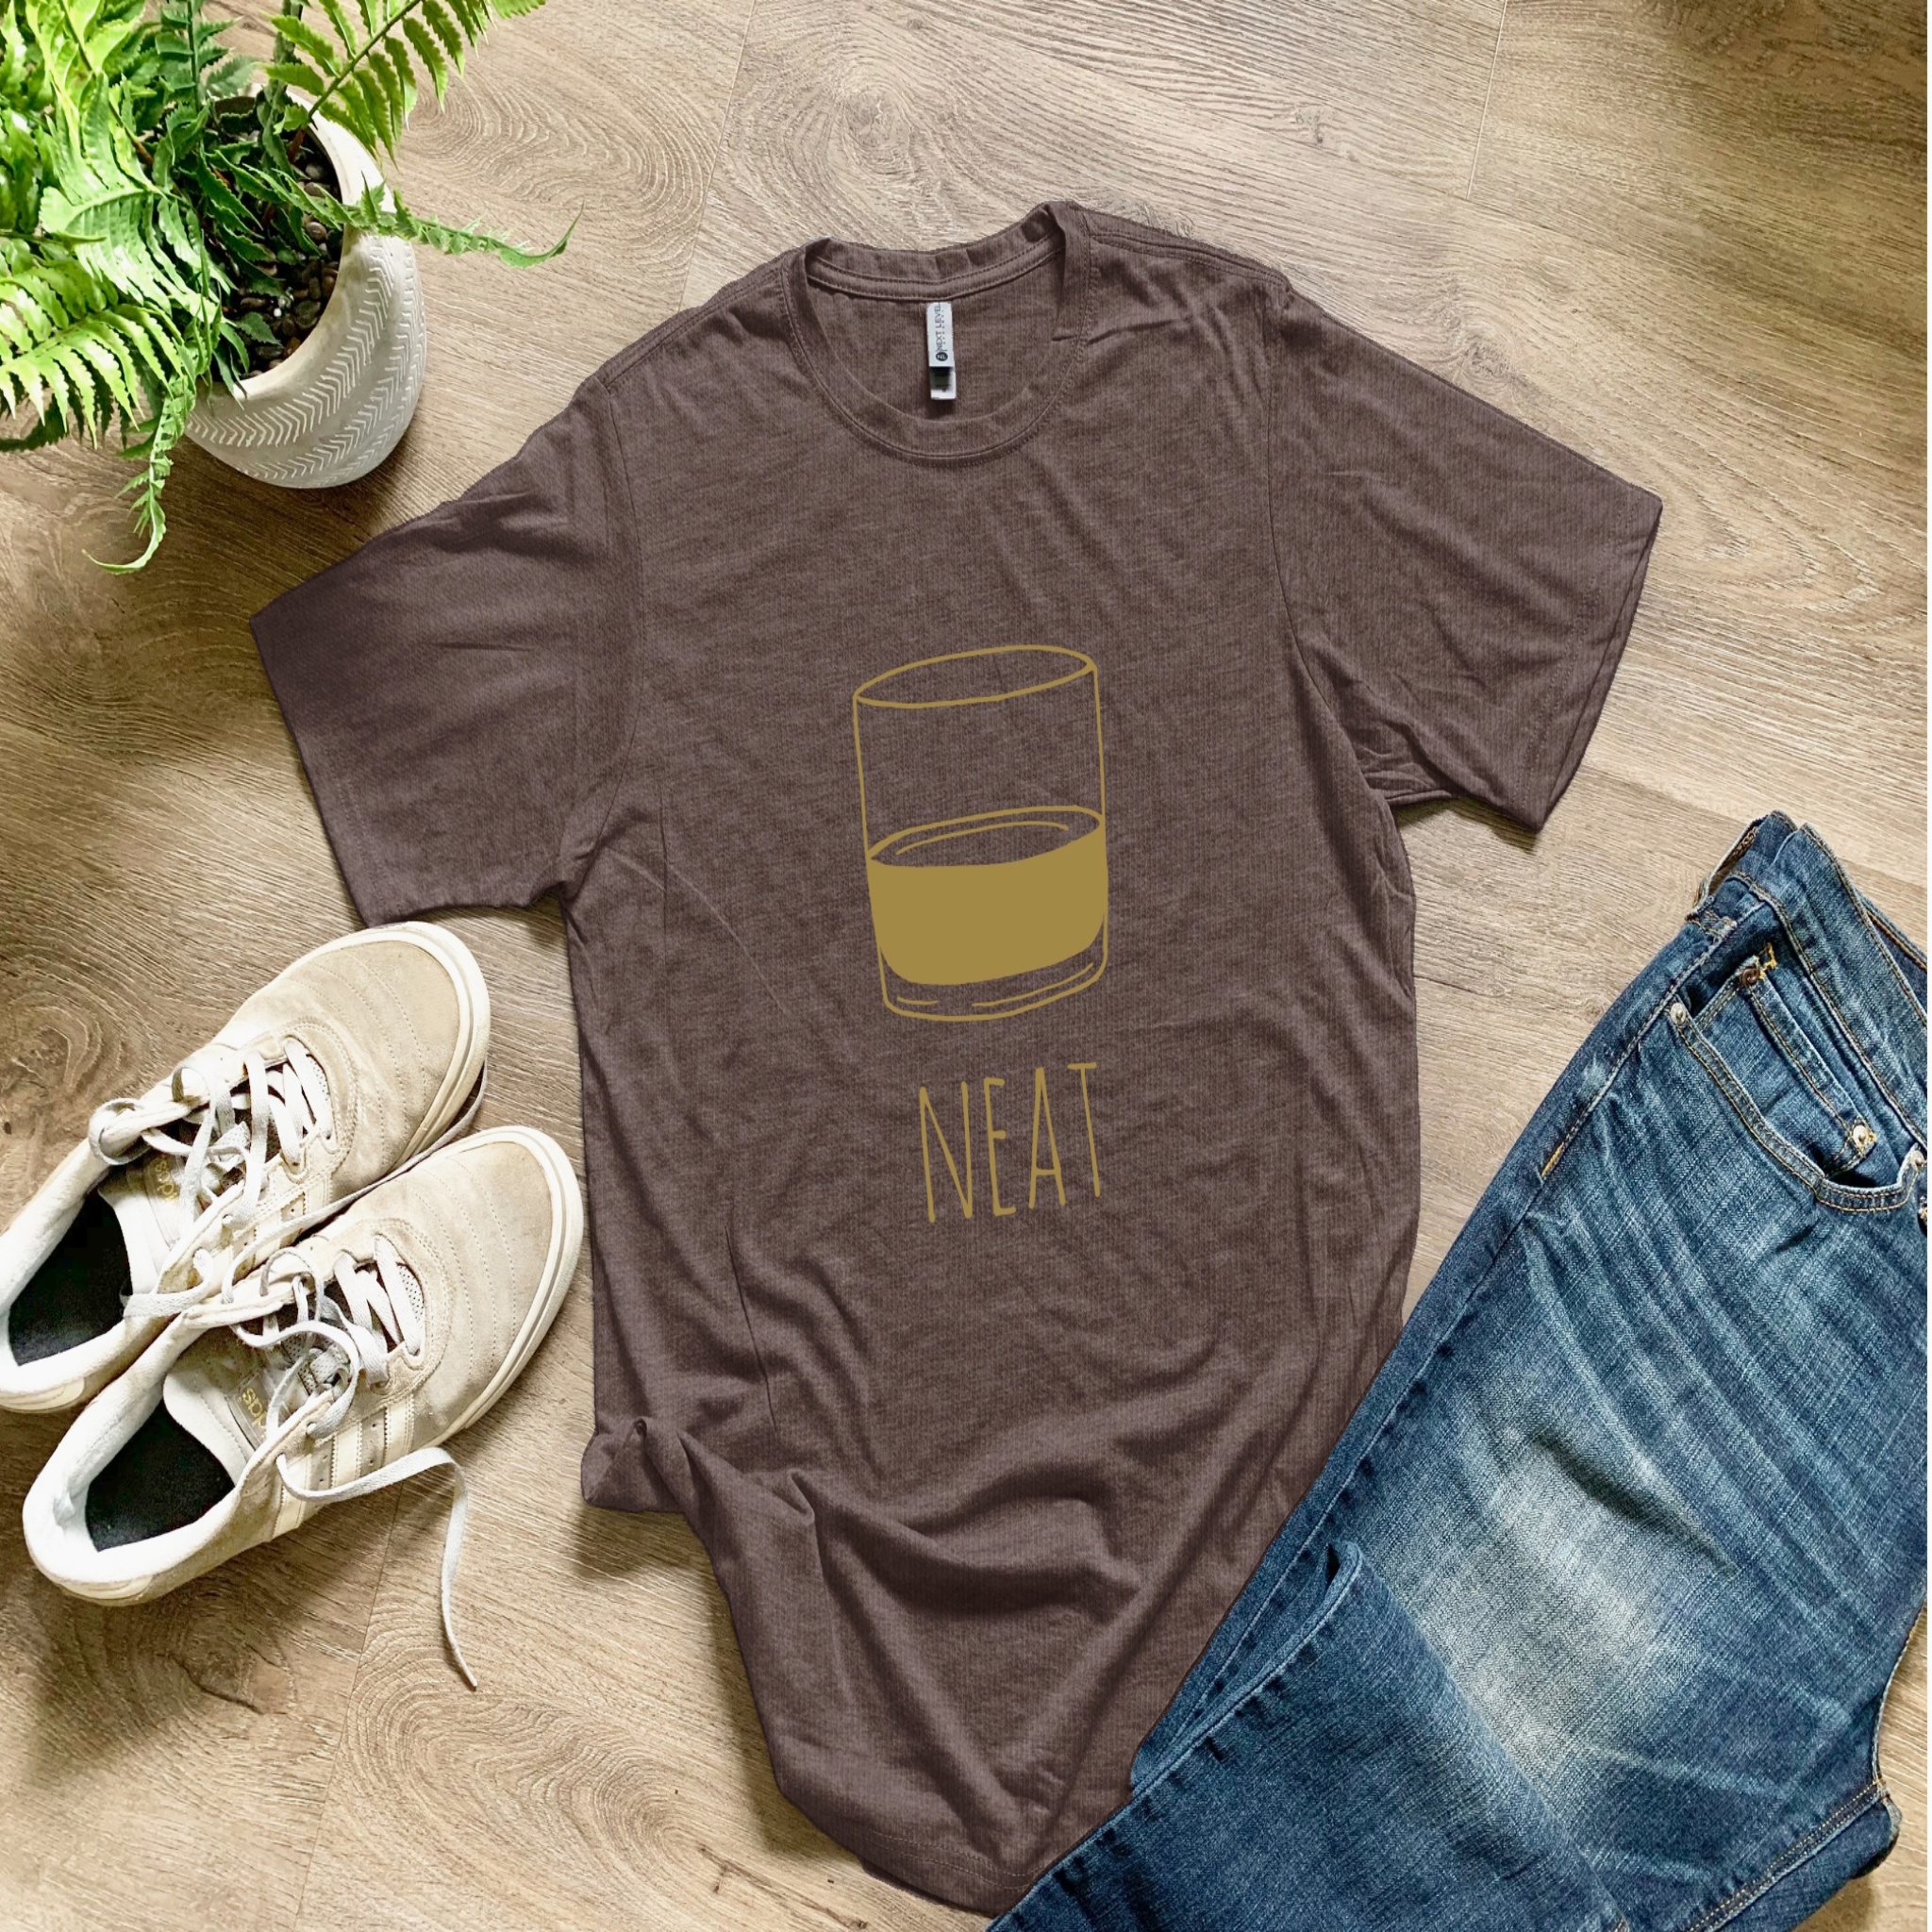 NEAT Men's T Shirts